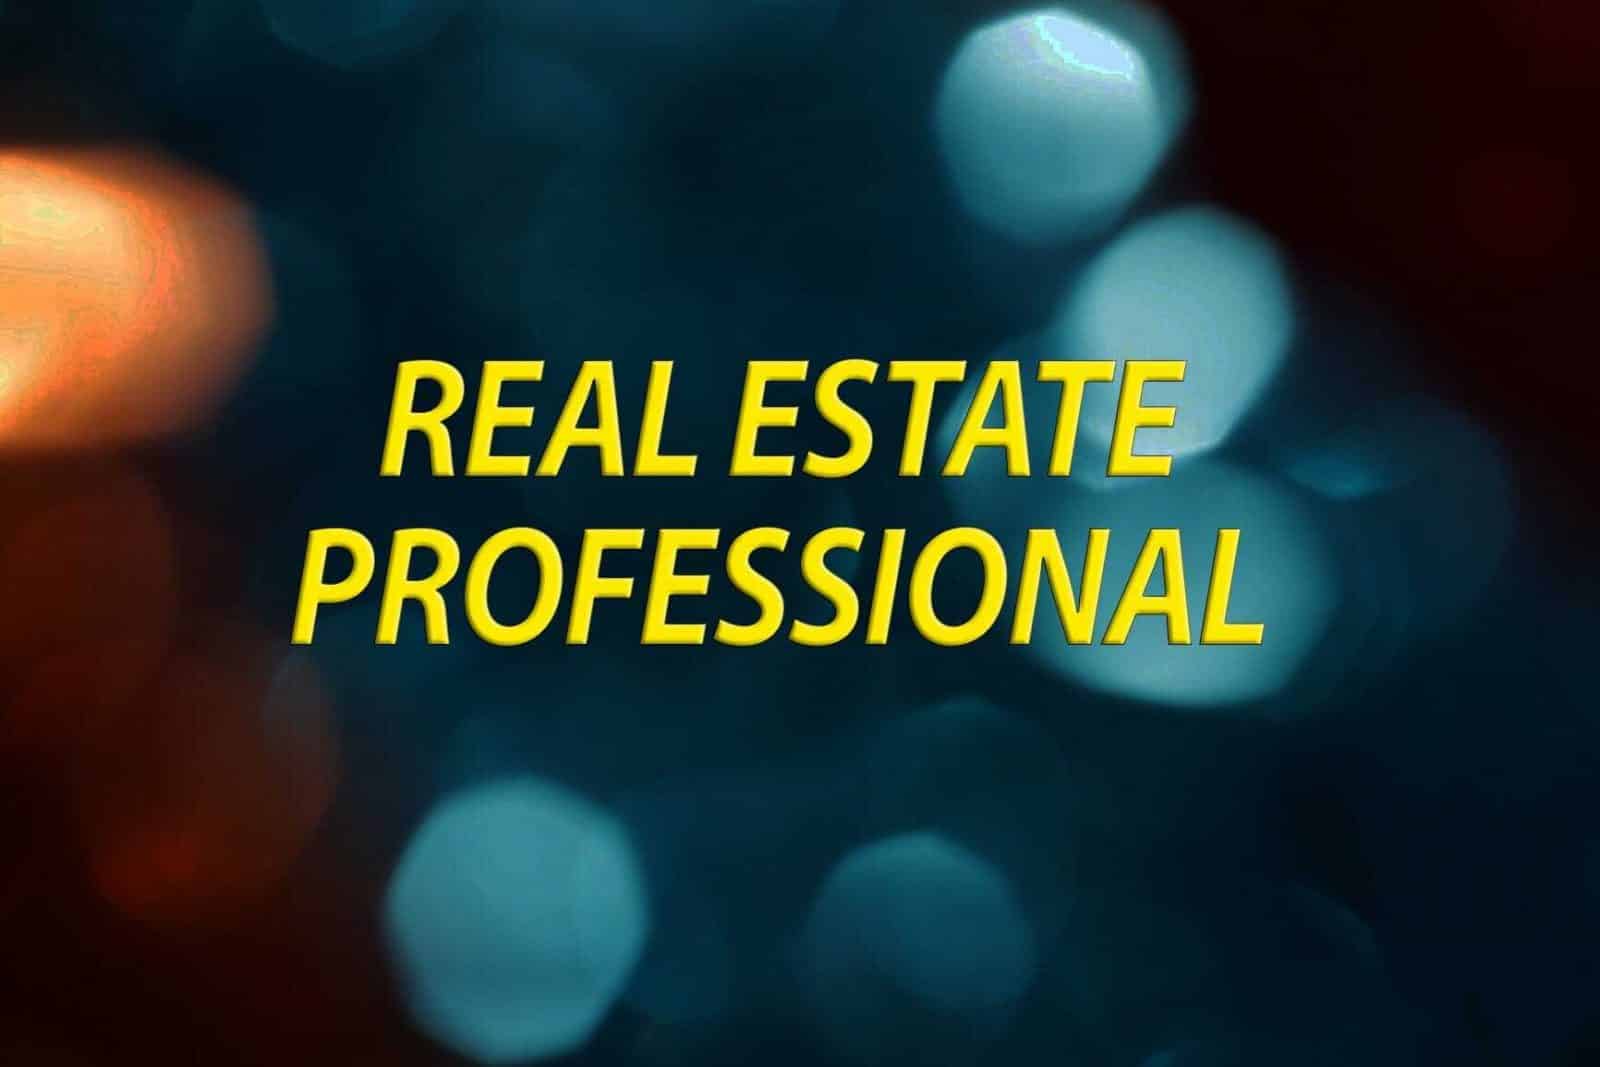 Real estate professional